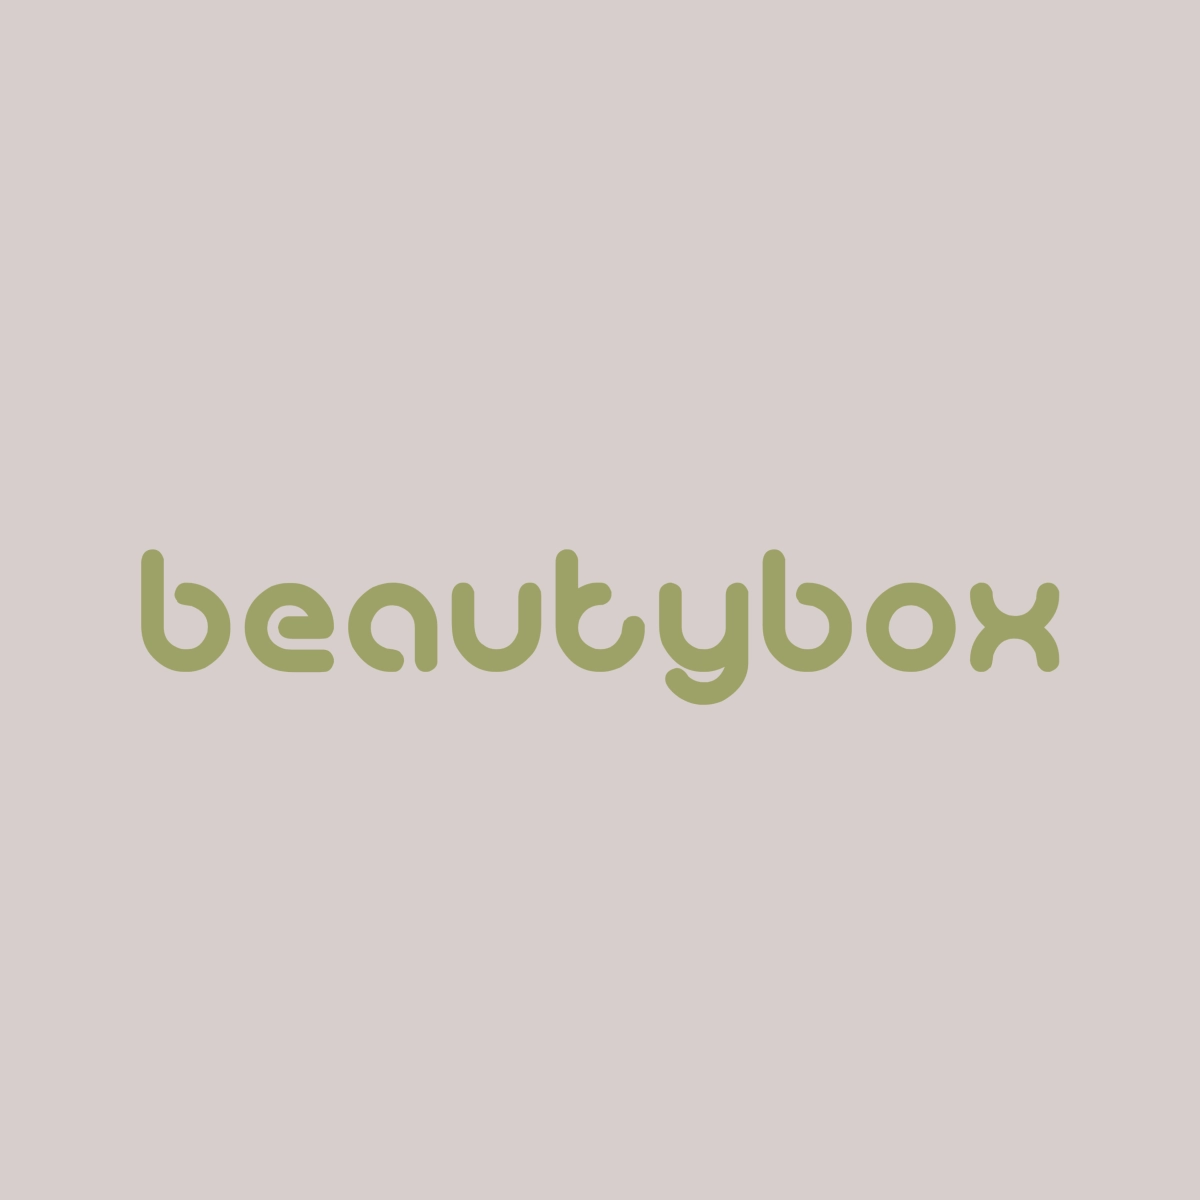 BeautyBox Opensolarium arrière plan